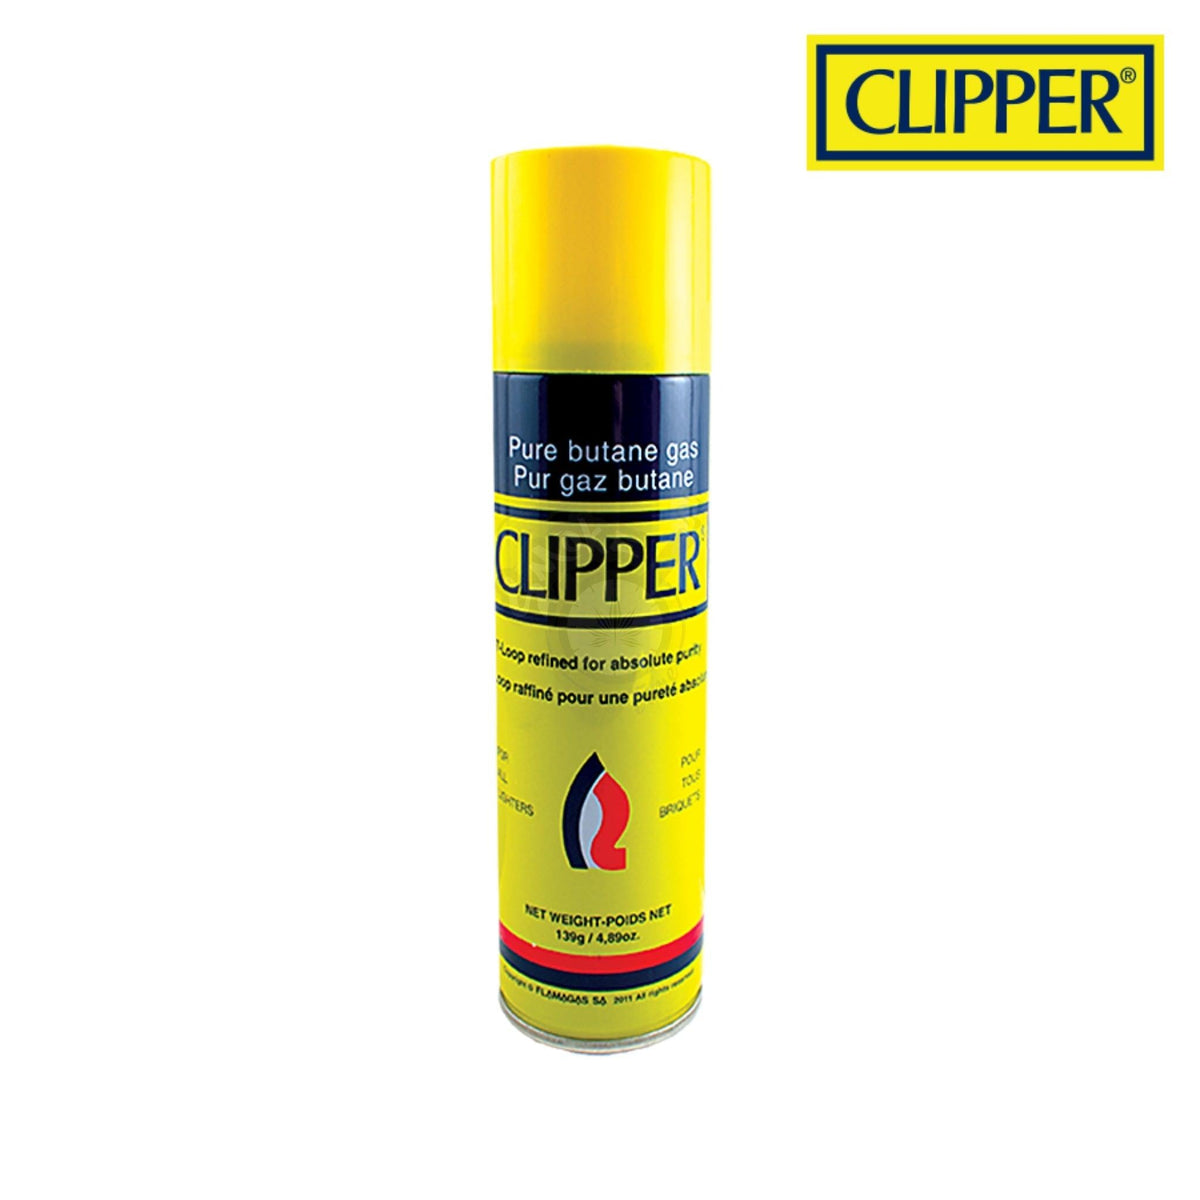 Clipper Butane Fuel 139g